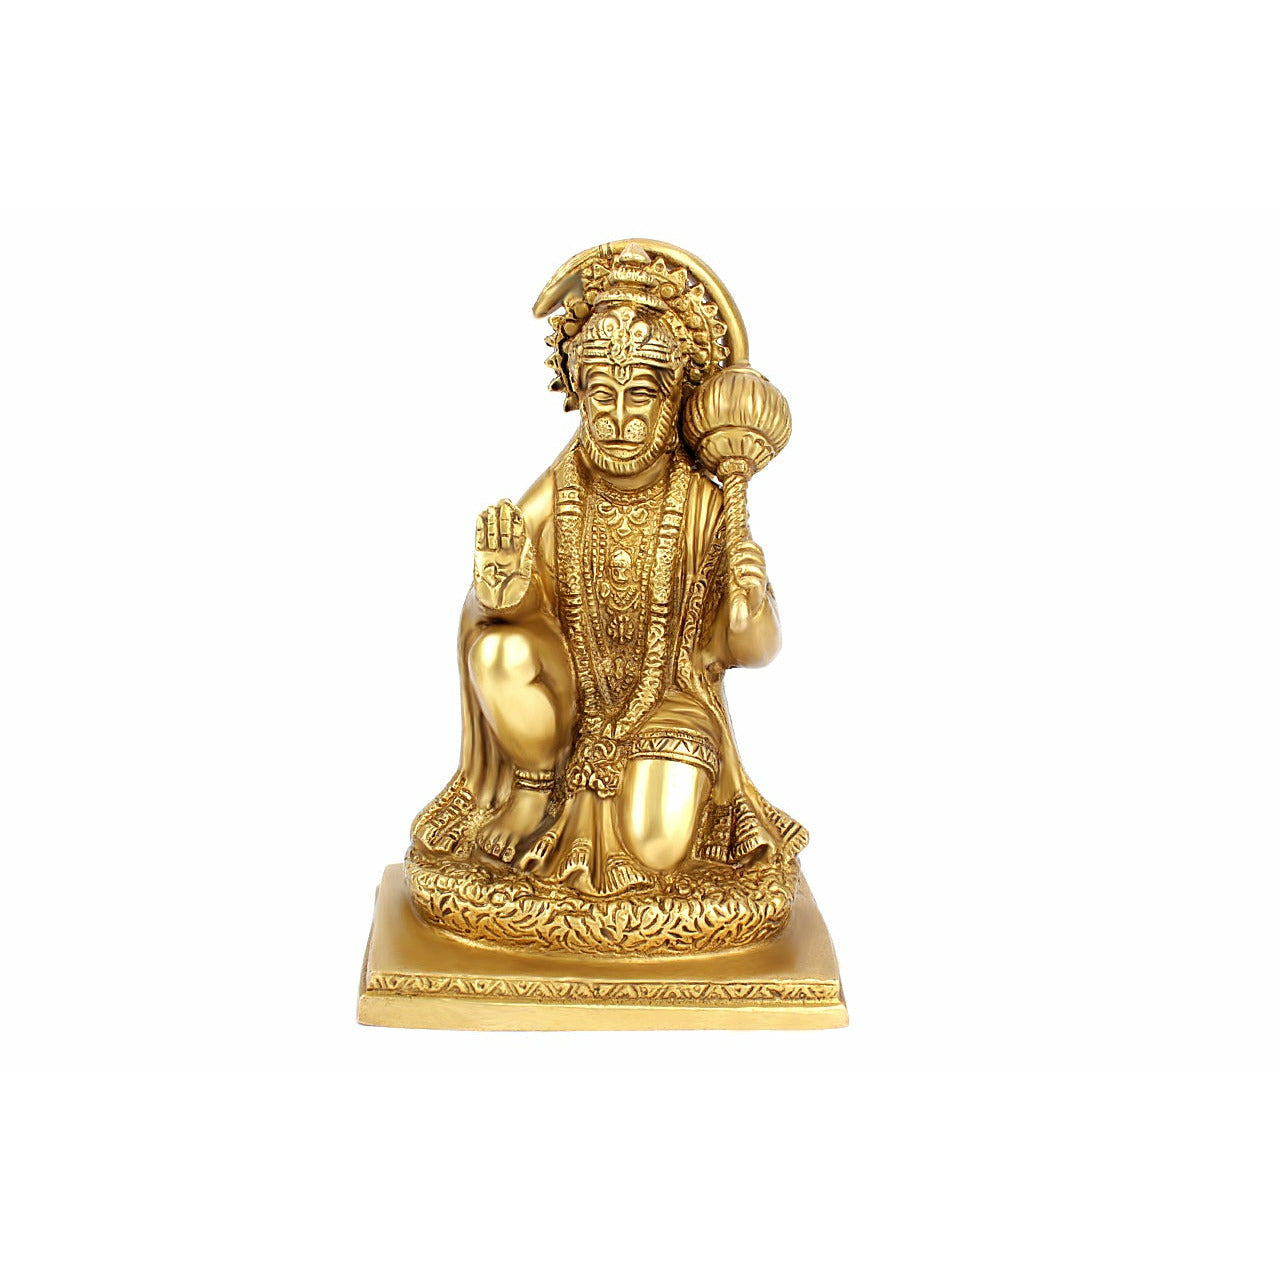 Hanuman statue made of solid shiny brass